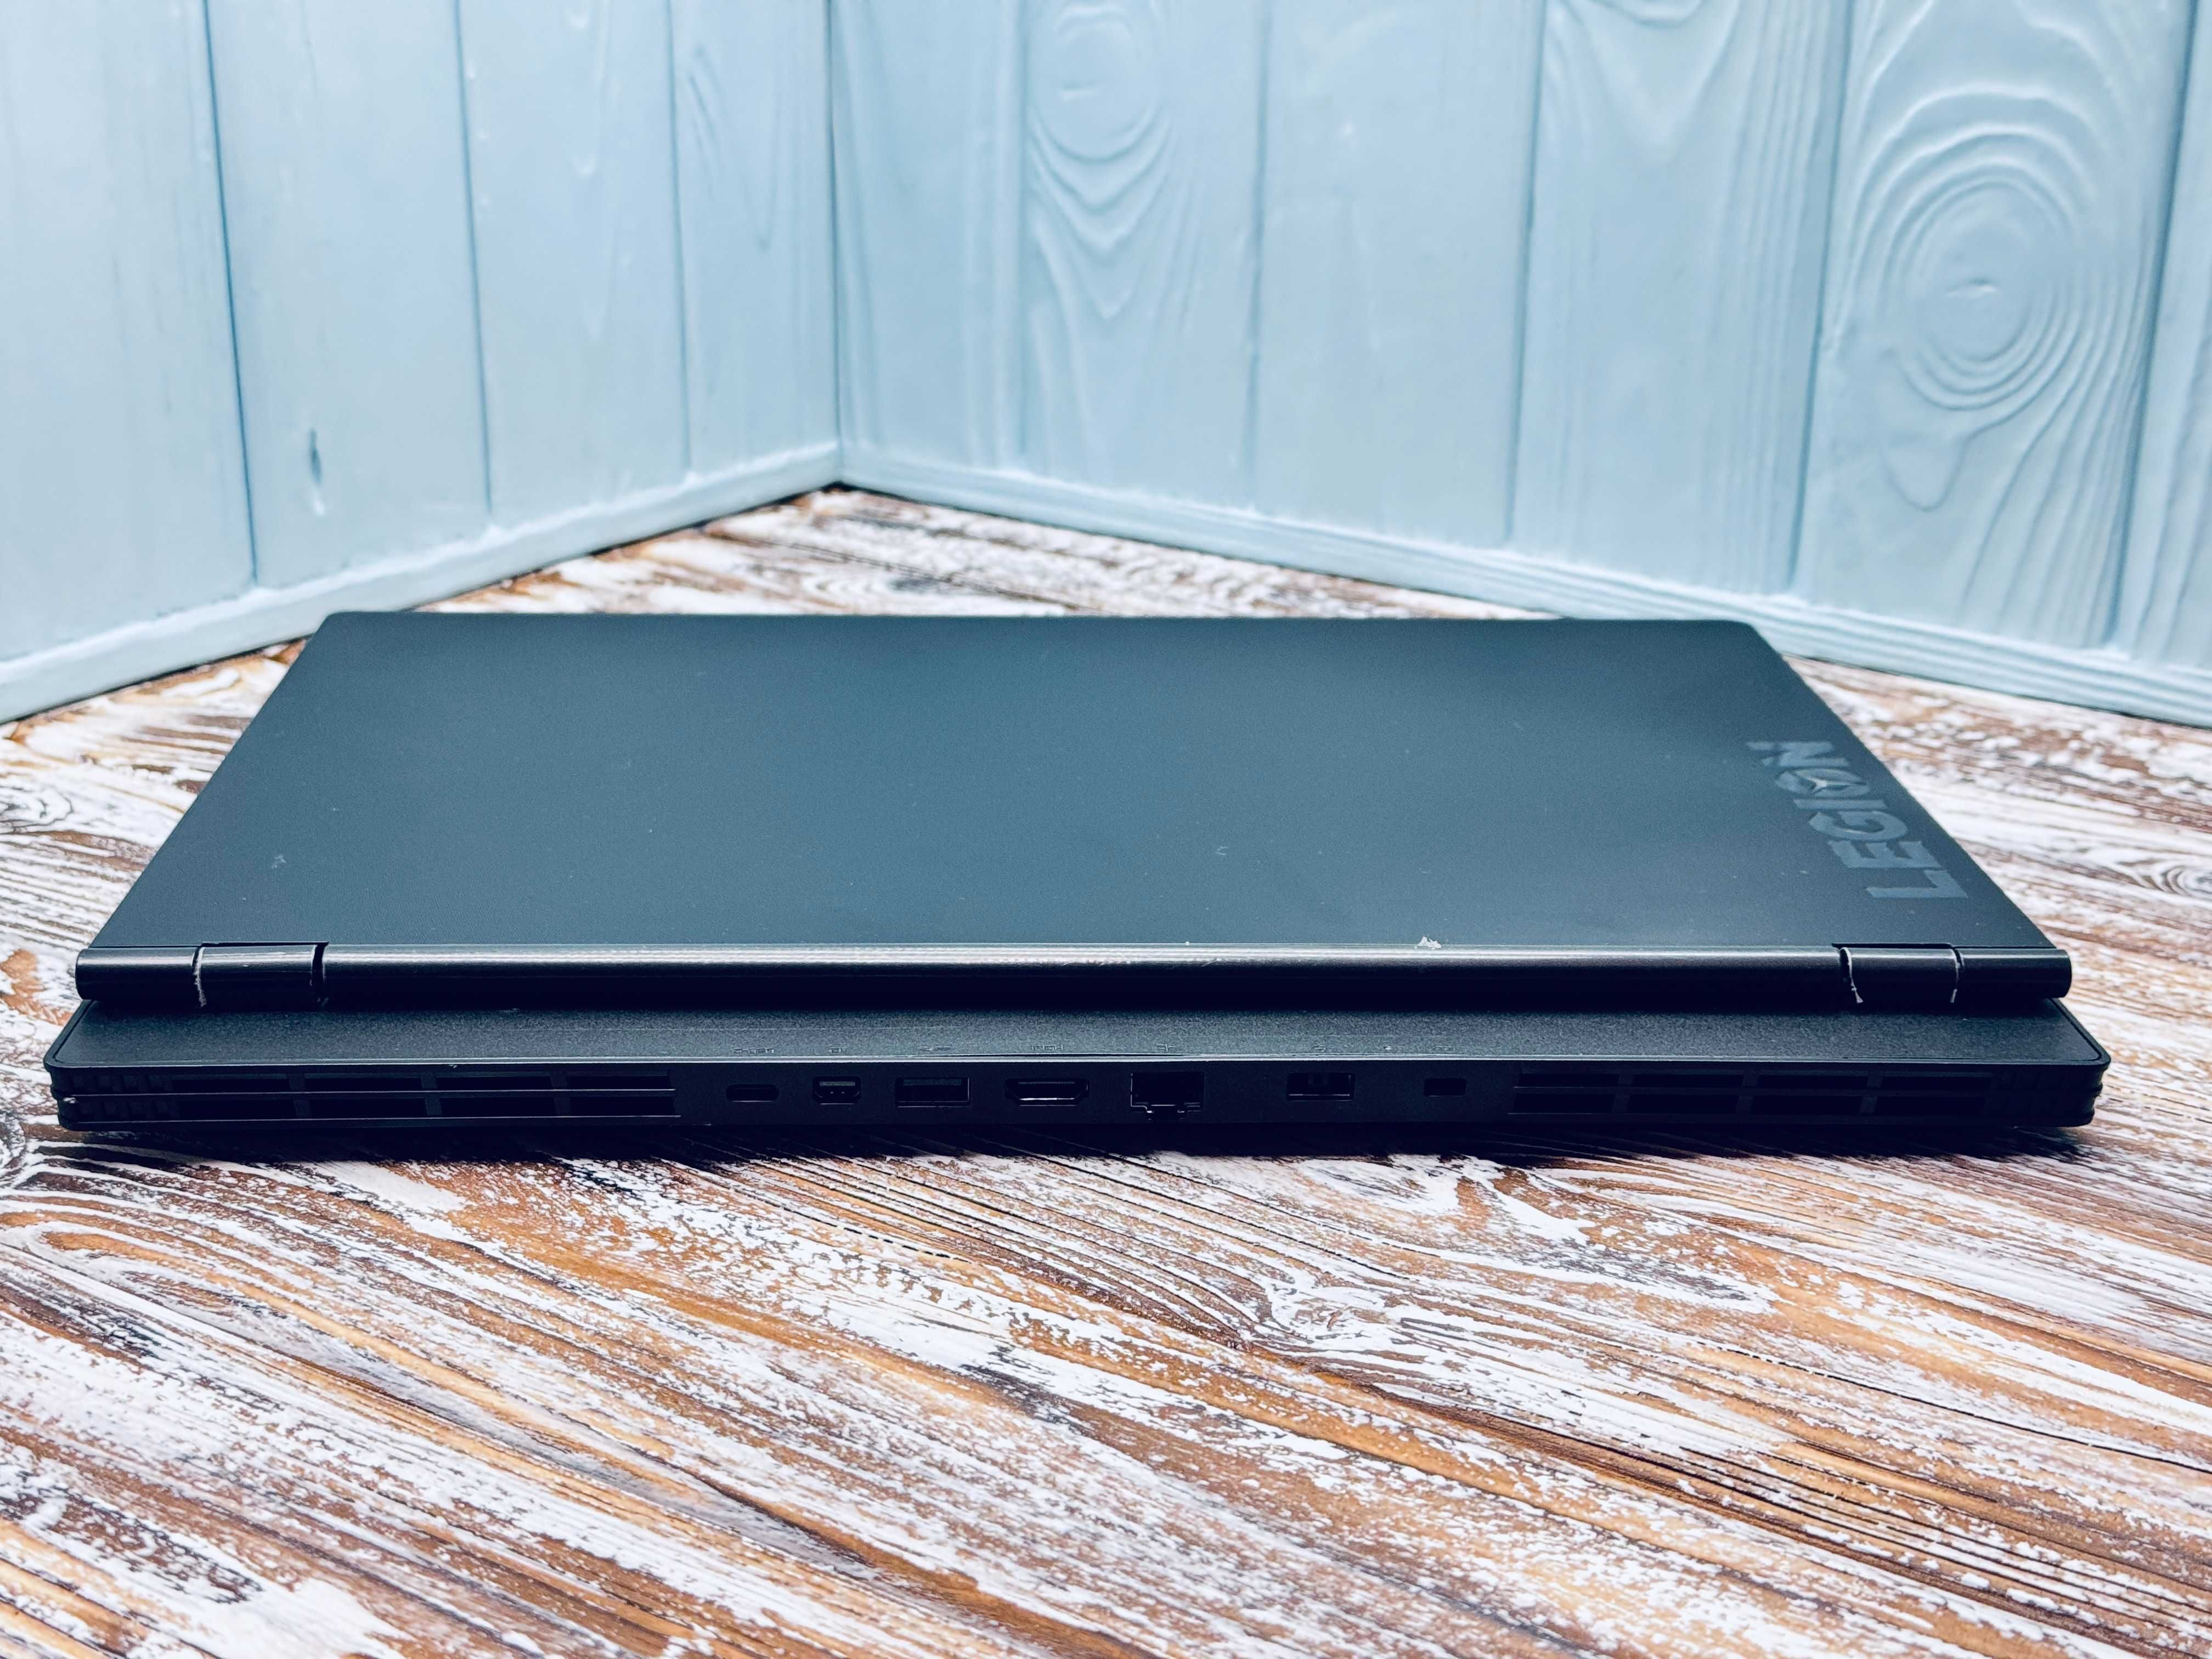 Геймерський Ноутбук 2020 року Lenovo Legion Y540/i5-9300H/GTX 1650 4GB